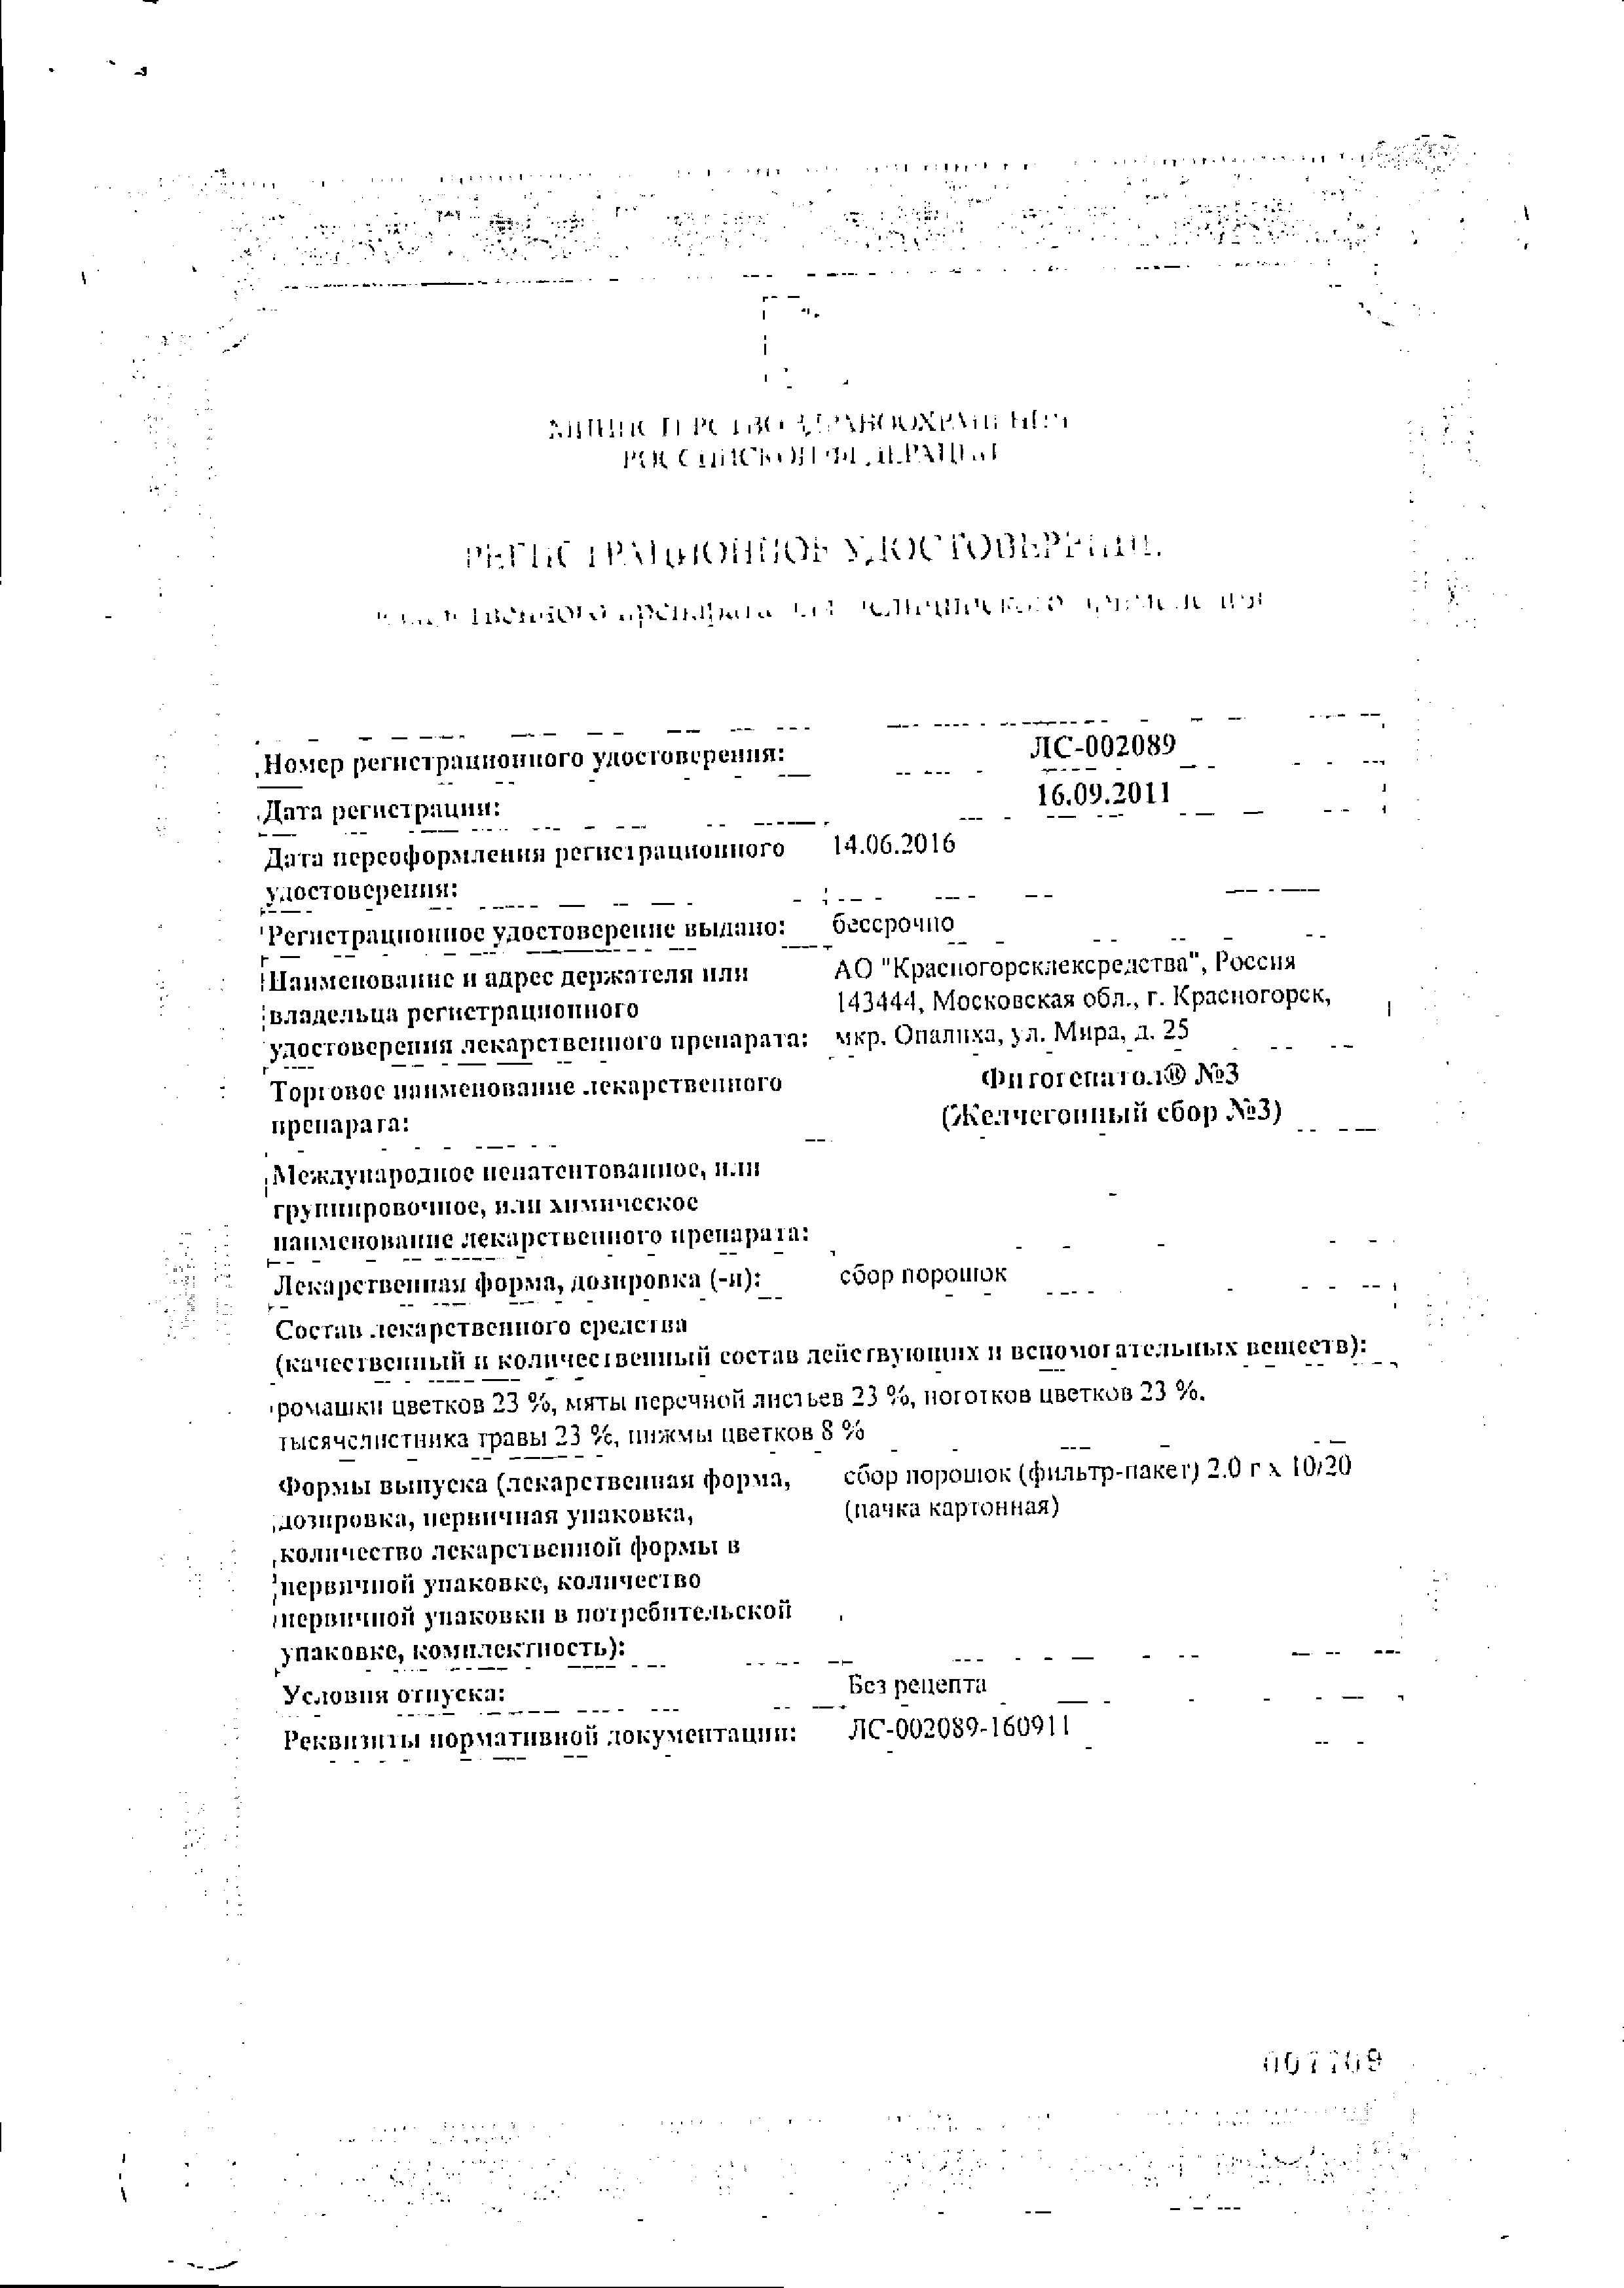 Фитогепатол №3 (Желчегонный сбор №3) сертификат